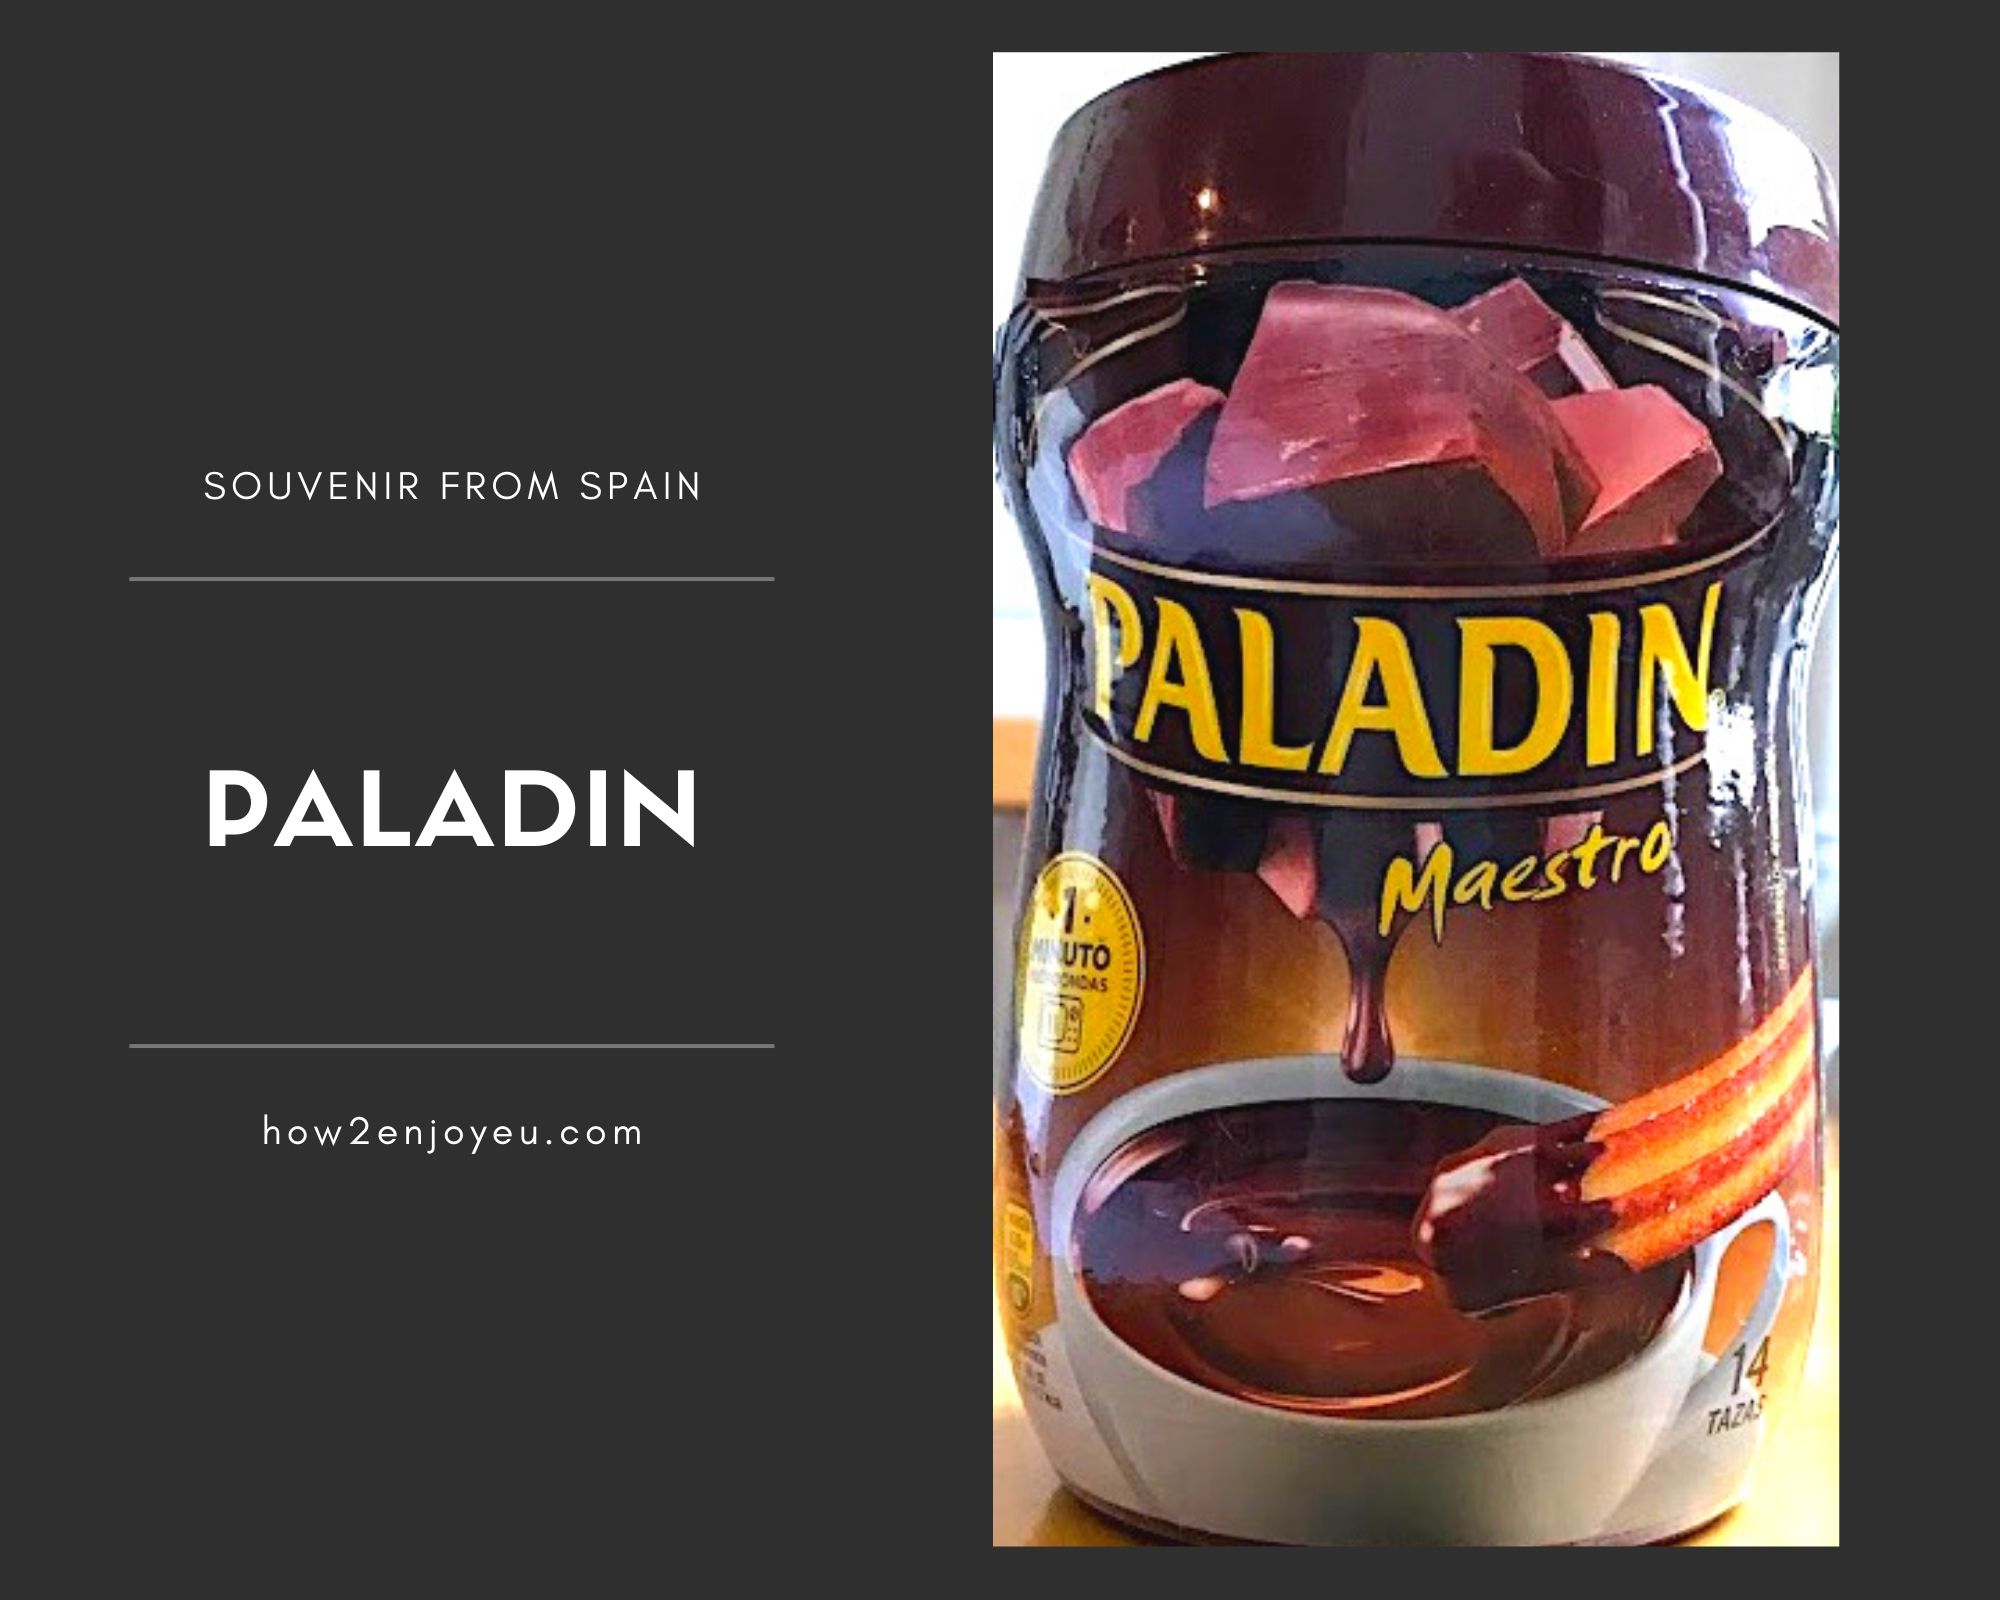 You are currently viewing スペイン土産に最適、スーパーで買えるホットチョコレートの素【PALADIN】は超オススメ